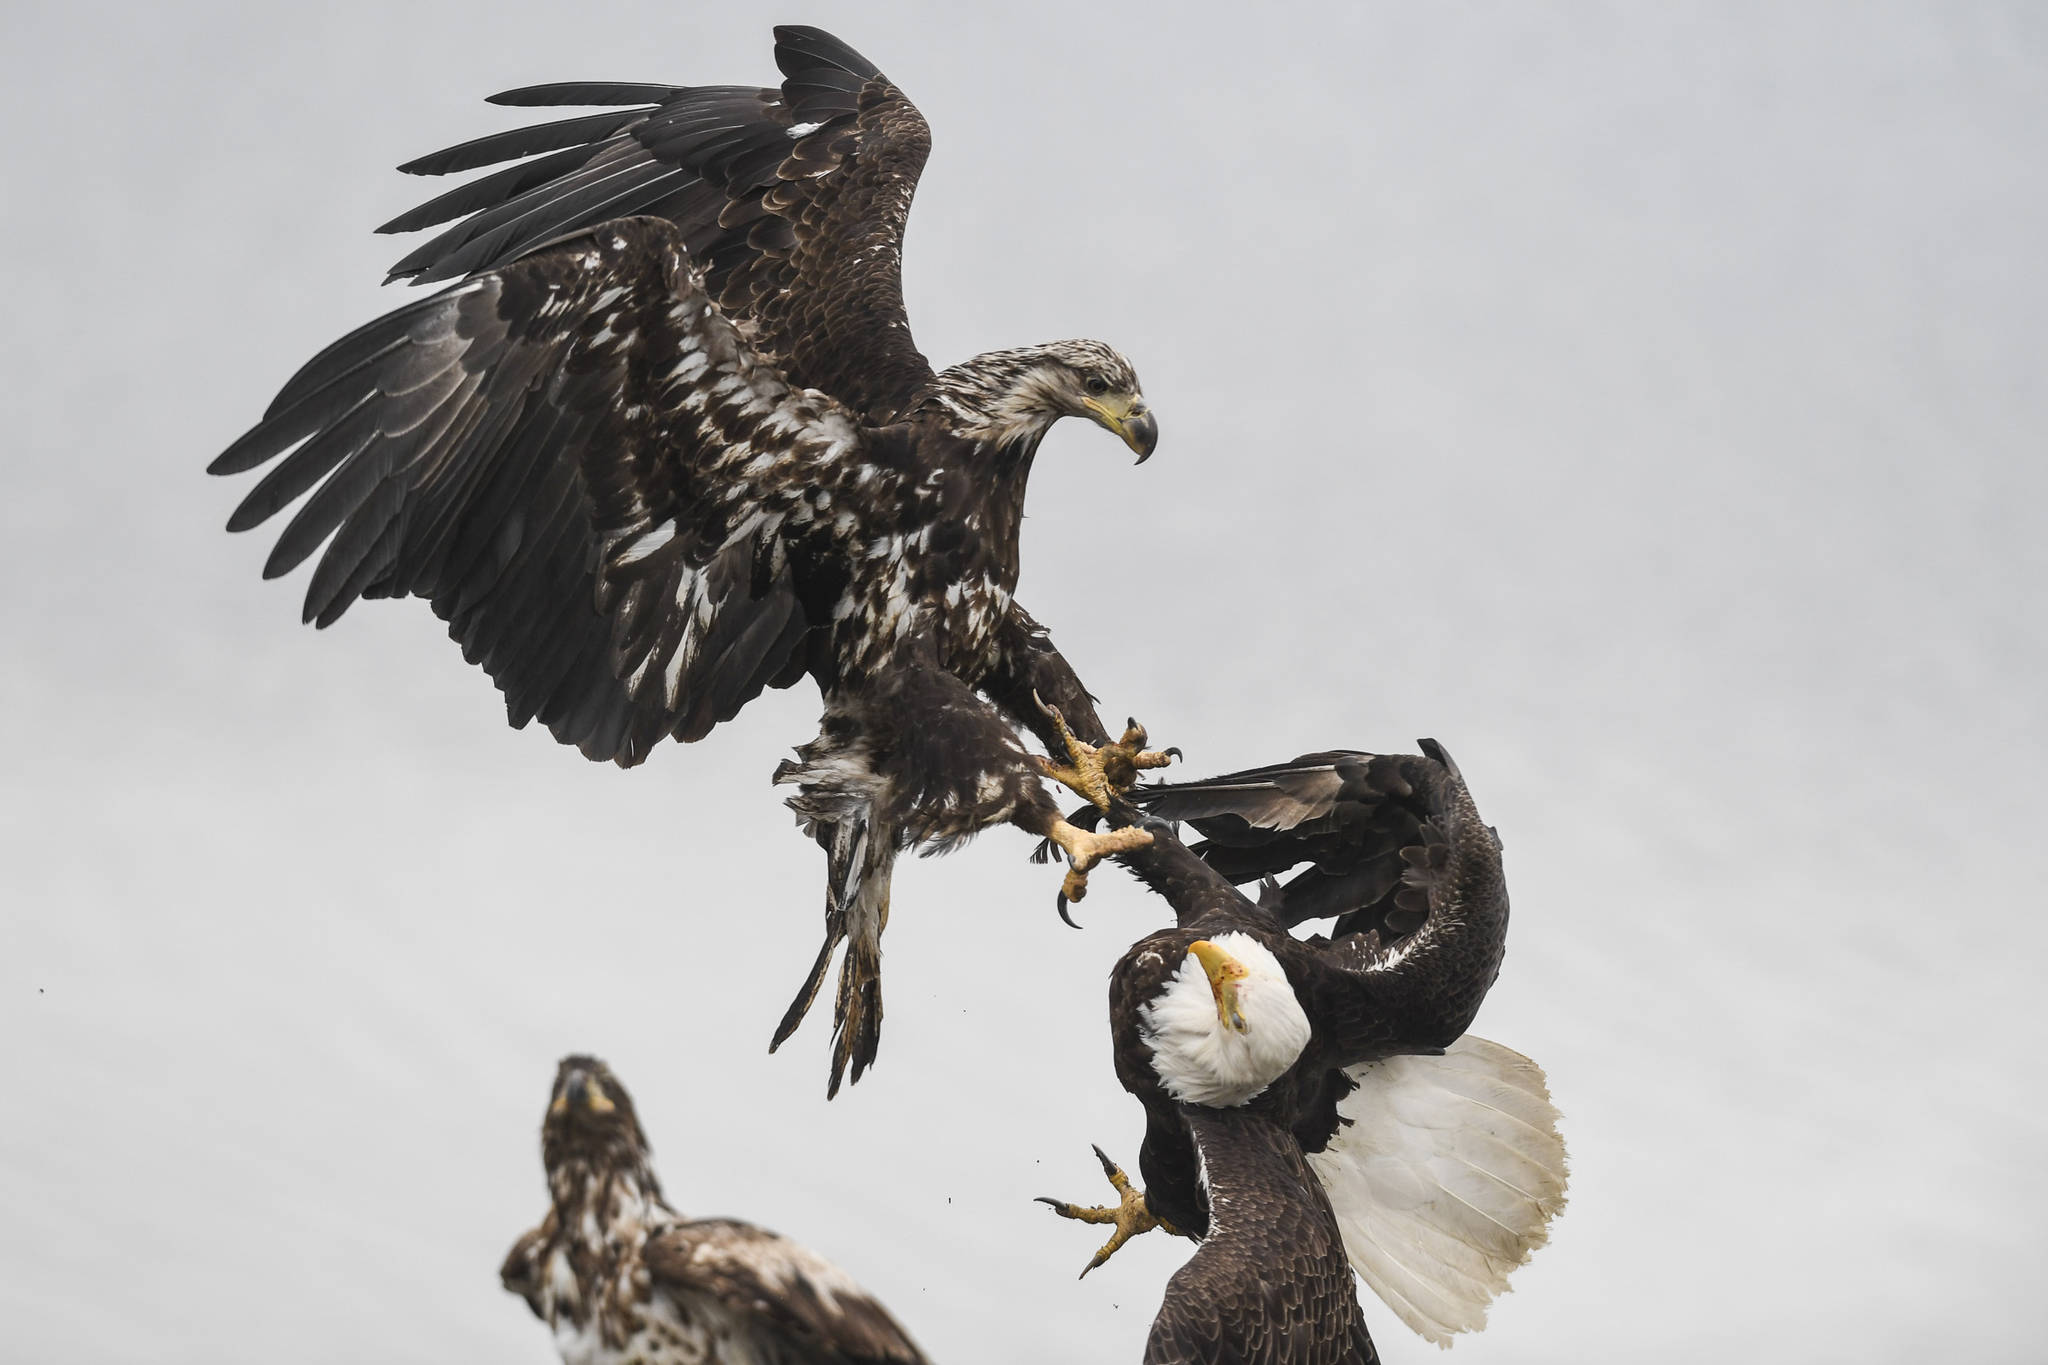 PHOTOS: Bald eagles feast near DIPAC